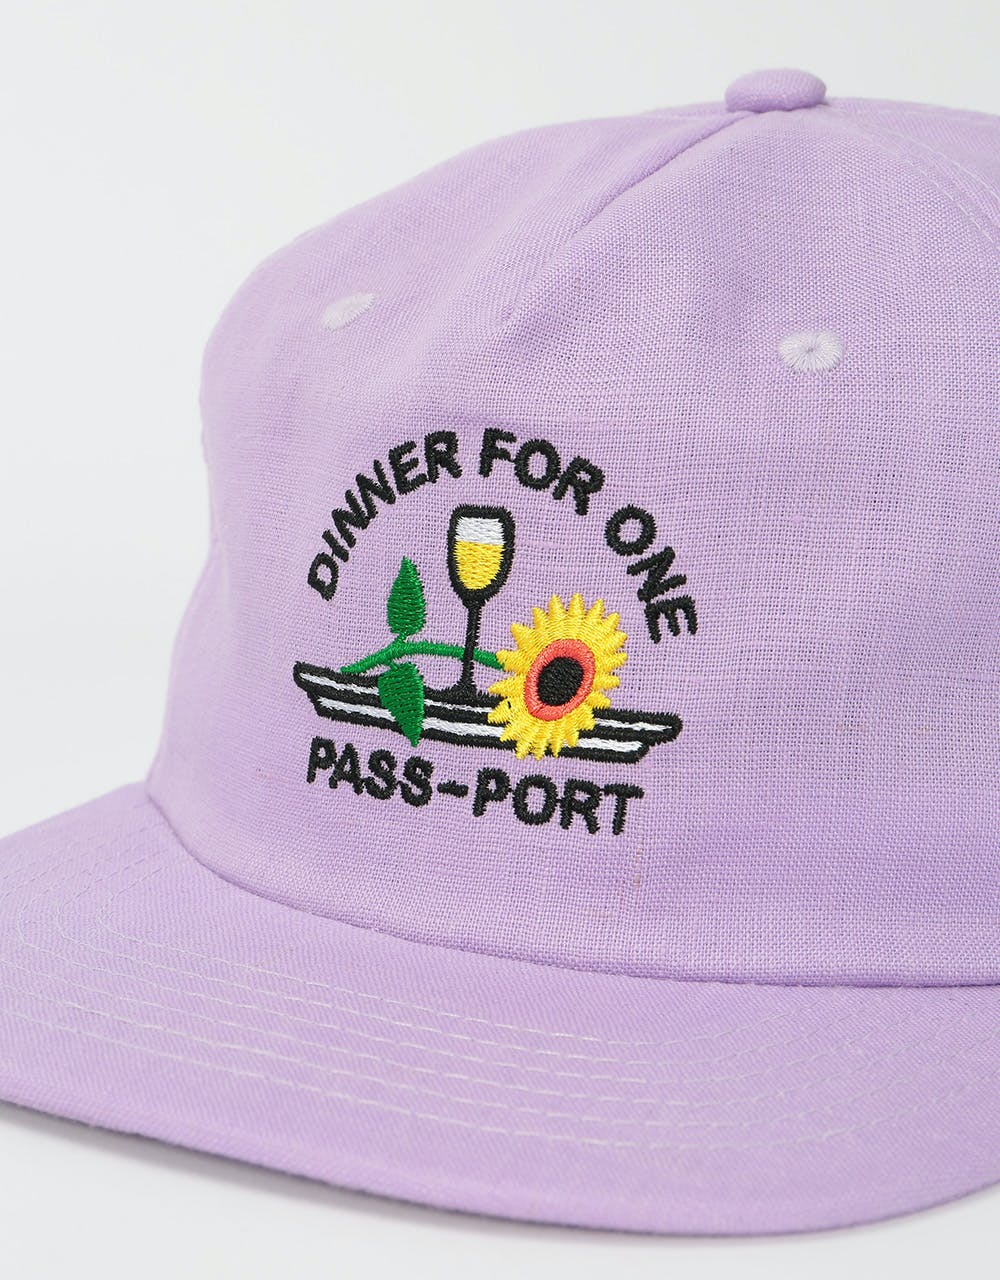 Pass Port Dinner For One Snapback Cap - Purple